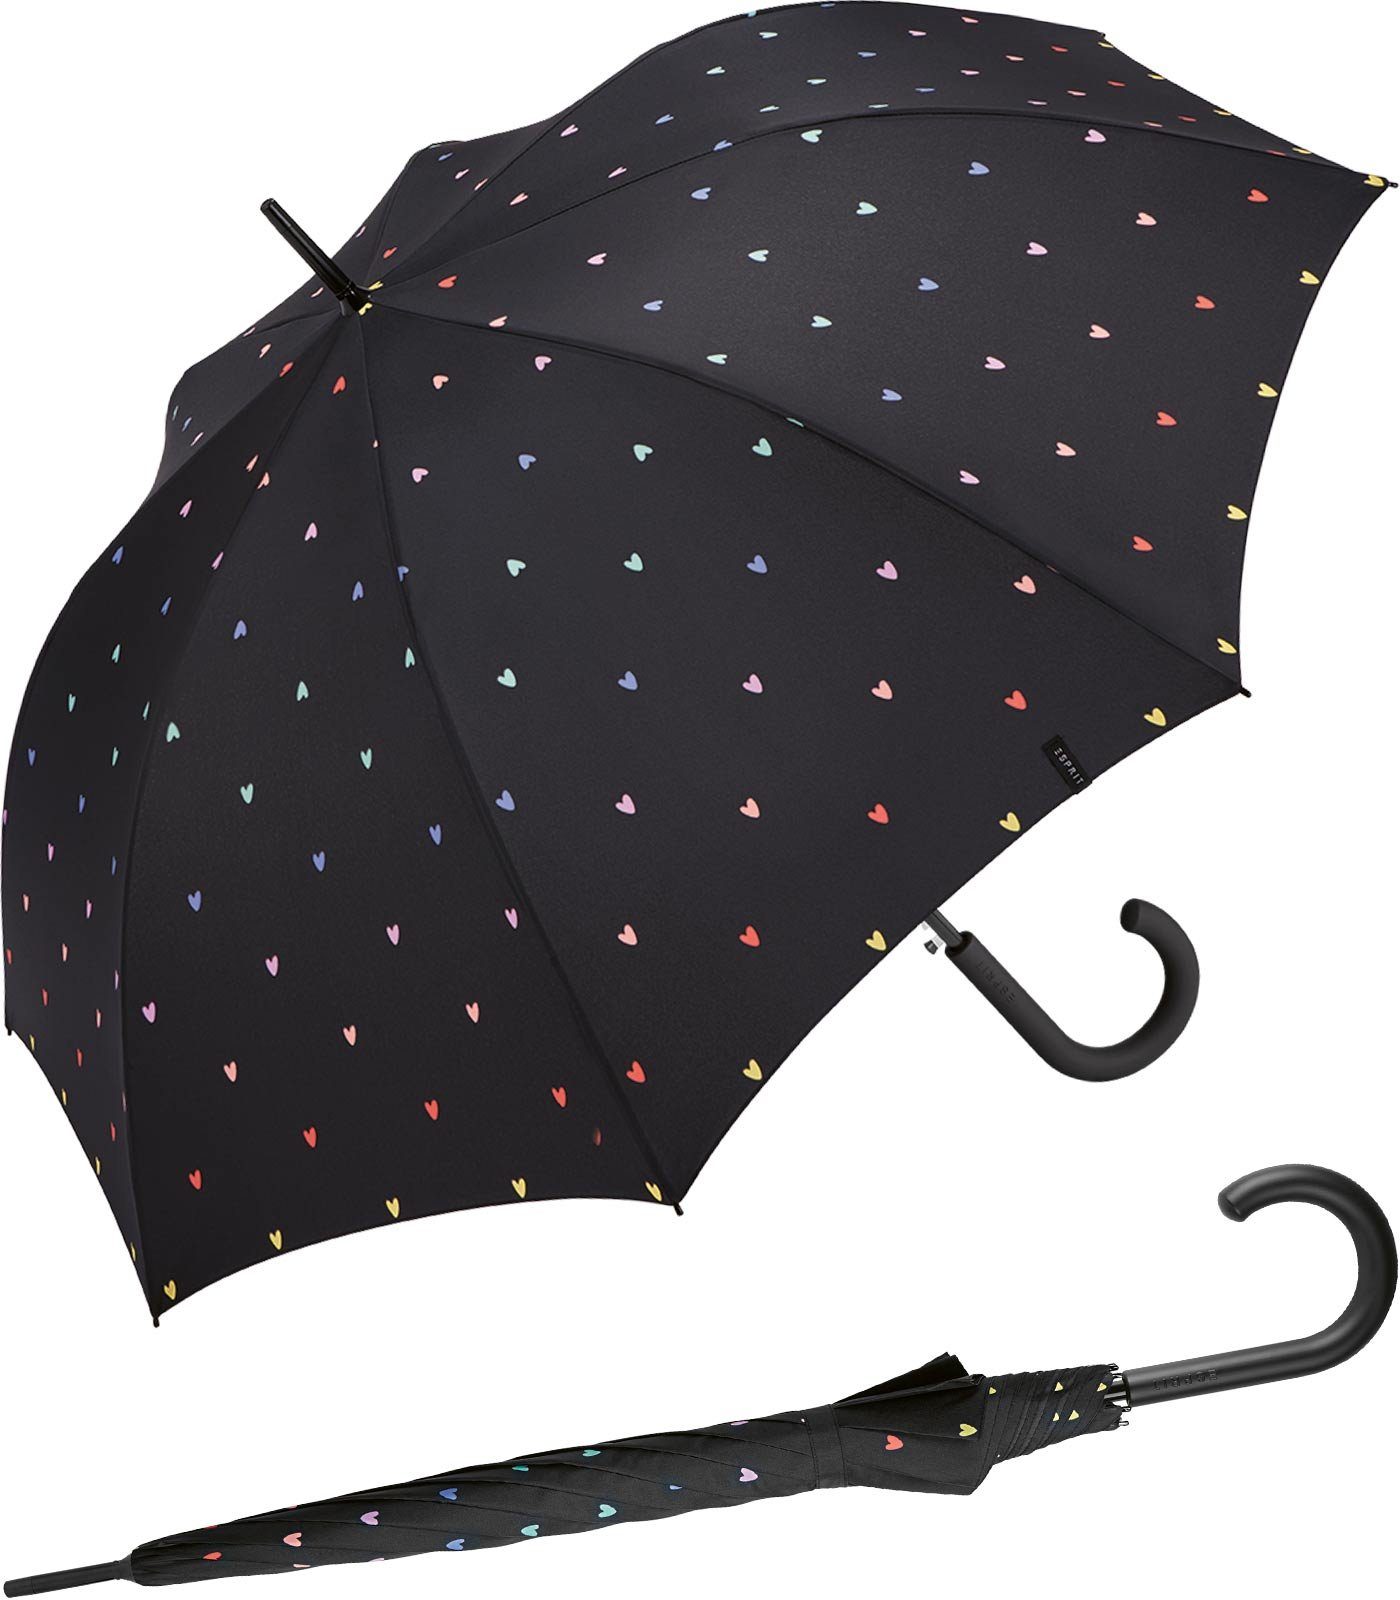 Beliebter Klassiker Esprit Langregenschirm Damen Regenschirm mit Herzen und groß mit Automatik Sweatheart, vielen kleinen, schwarz bunten stabil